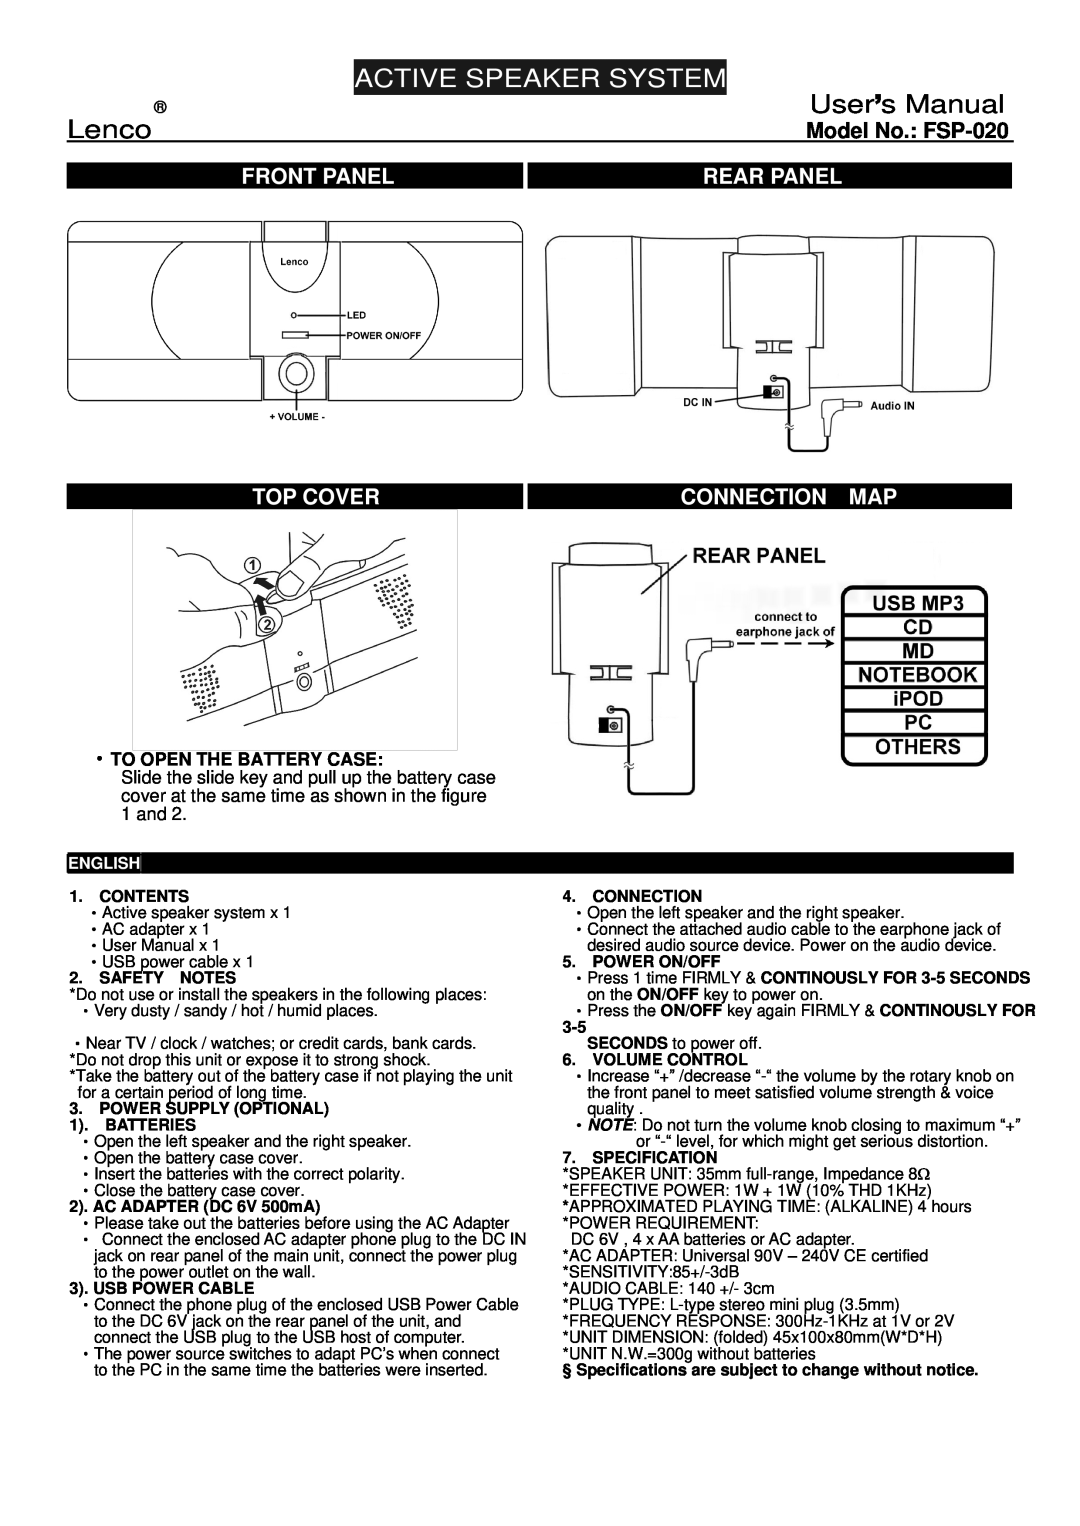 Lenco Marine user manual Active Speaker System, User s Manual, Lenco, Model No. FSP-020, Front Panel, Rear Panel 